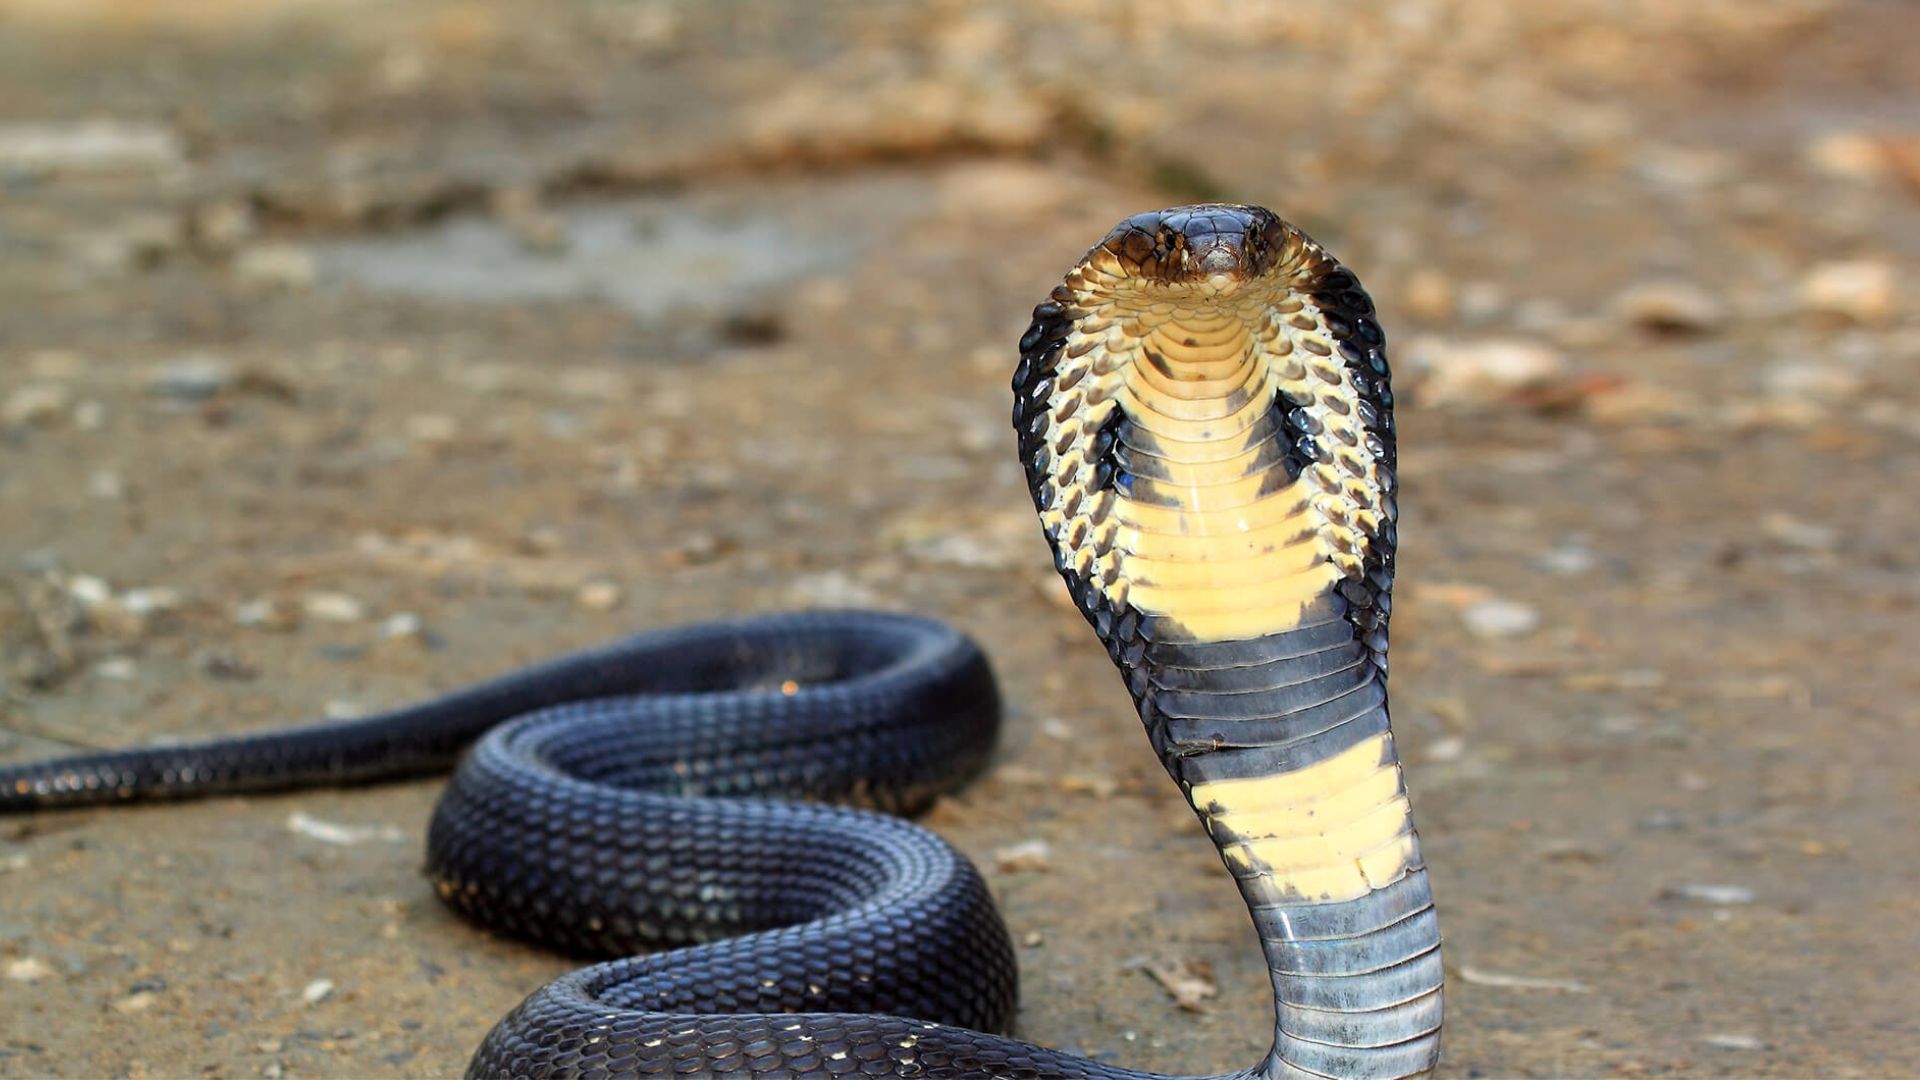 Black Cobra In Standing Position